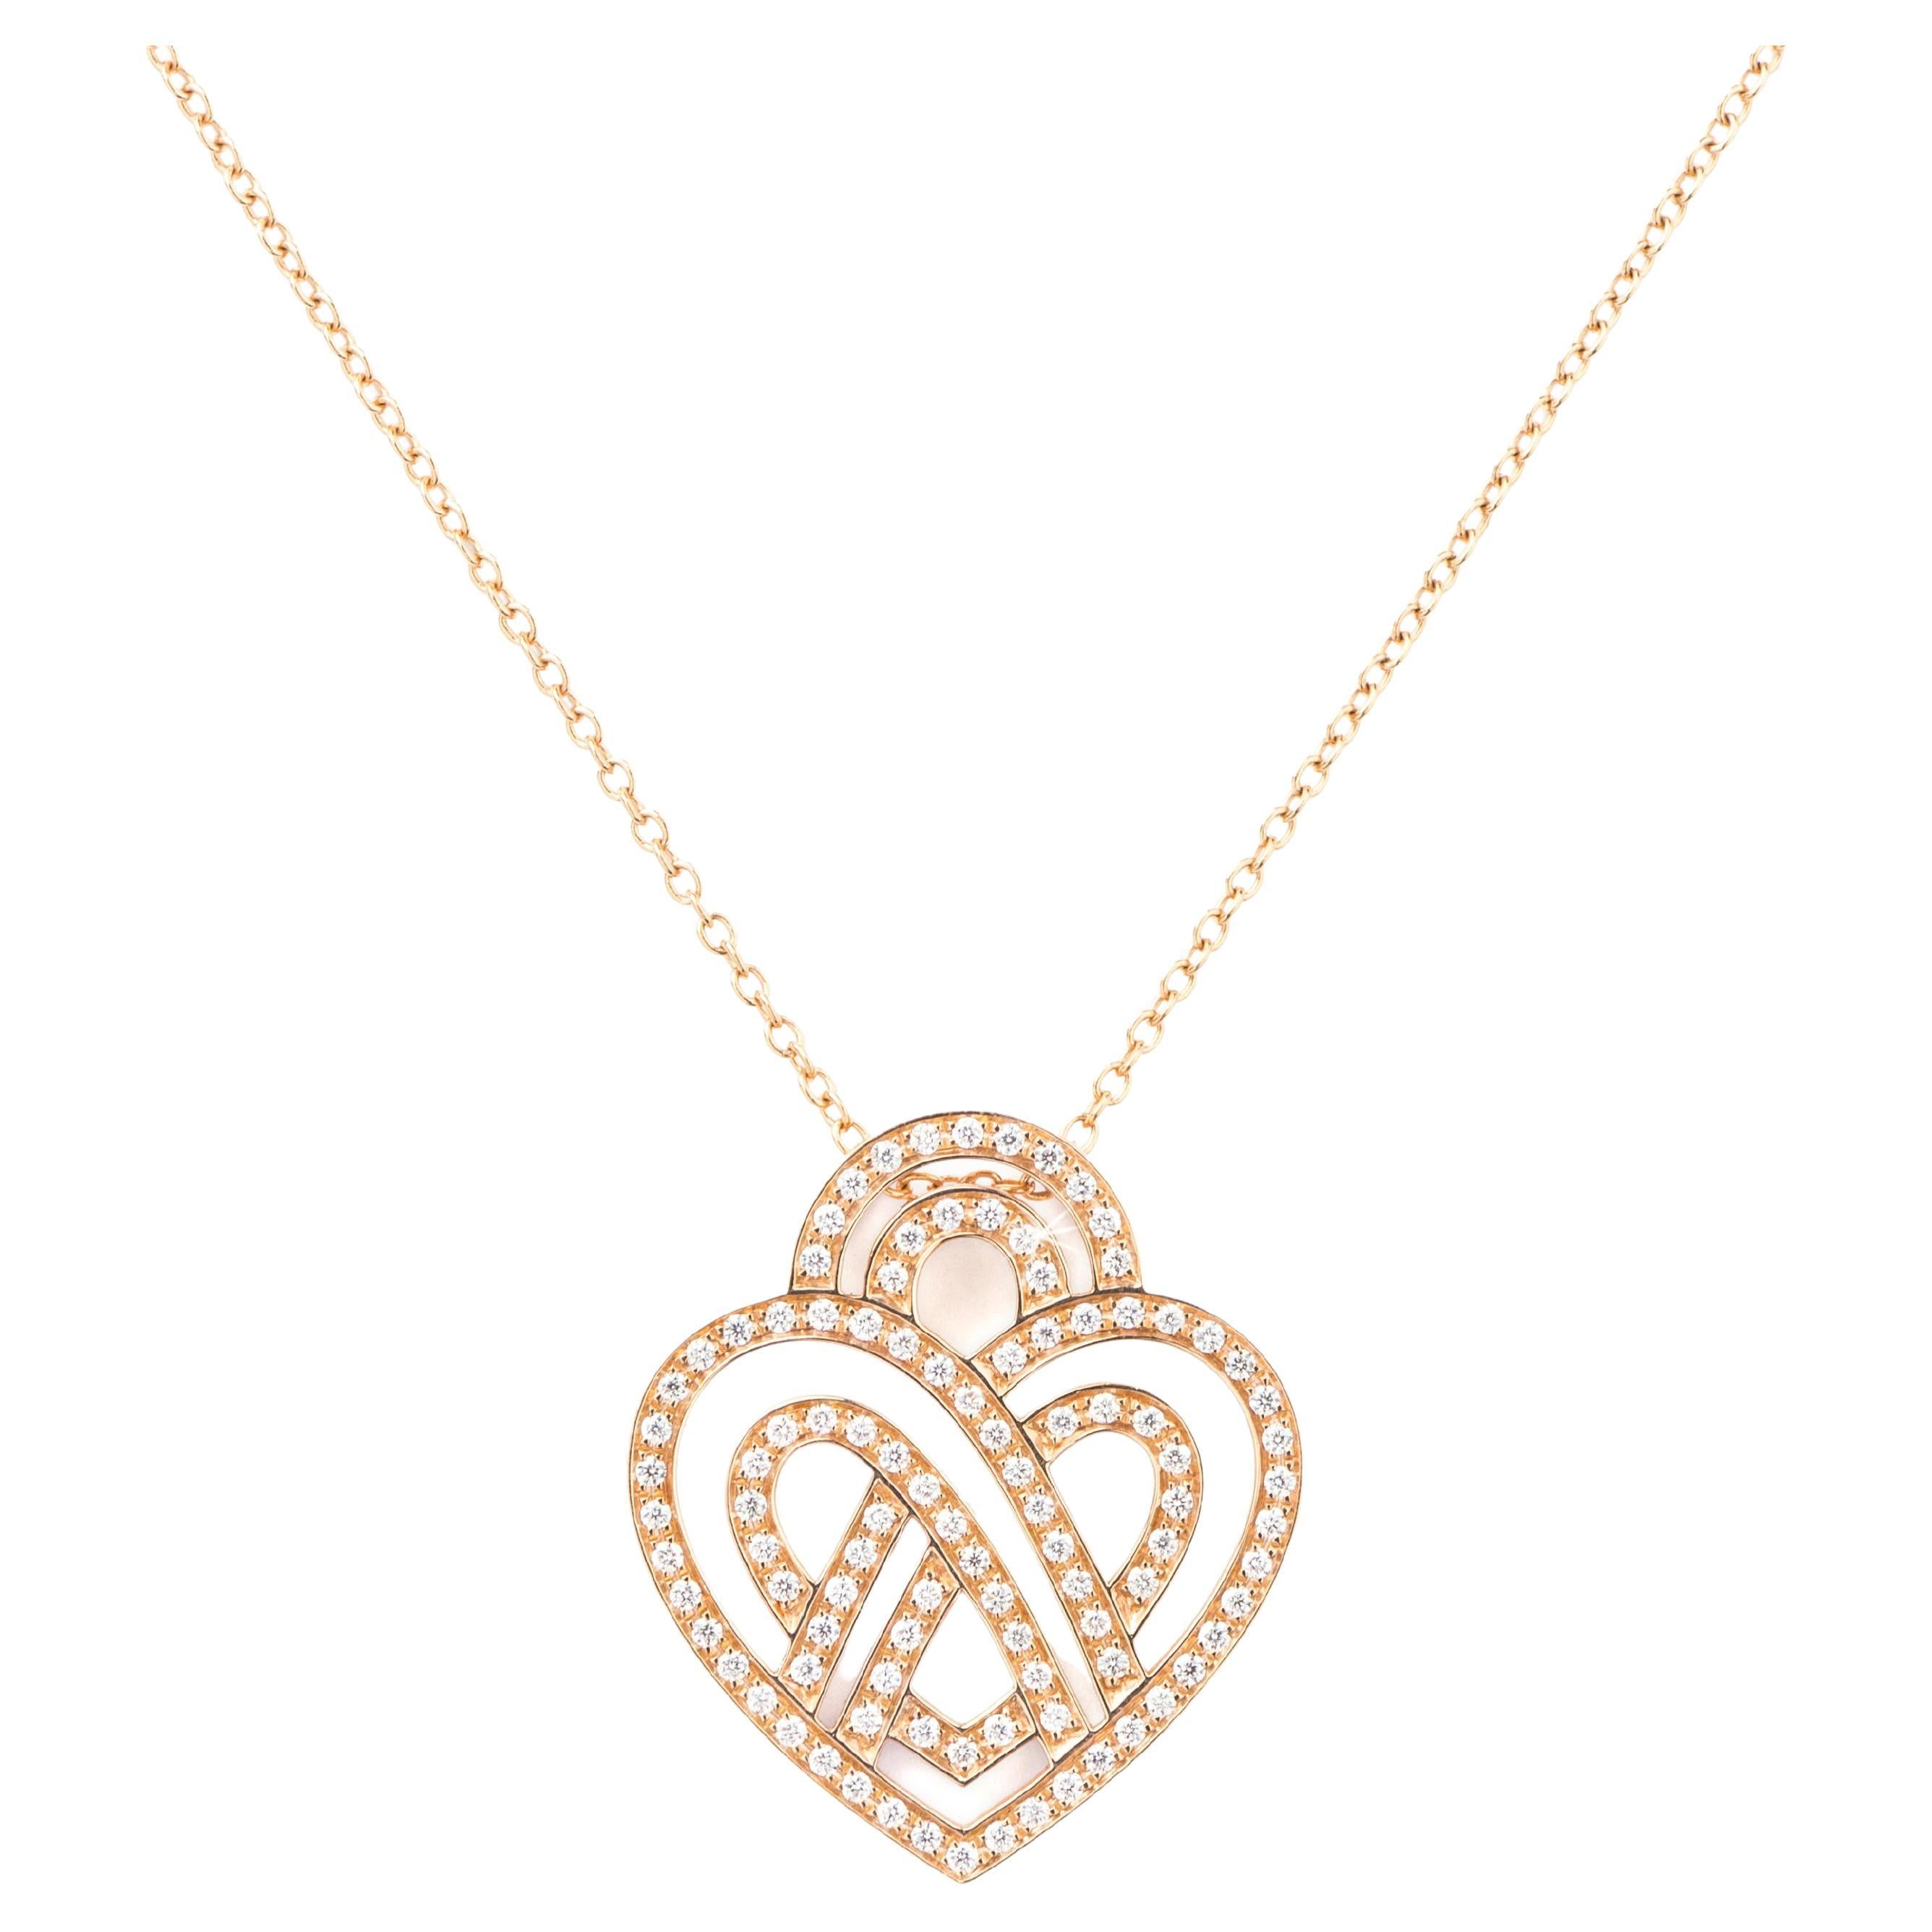 18 Carats Gold and Diamonds Necklace, Rose Gold, Coeur Entrelacé Collection